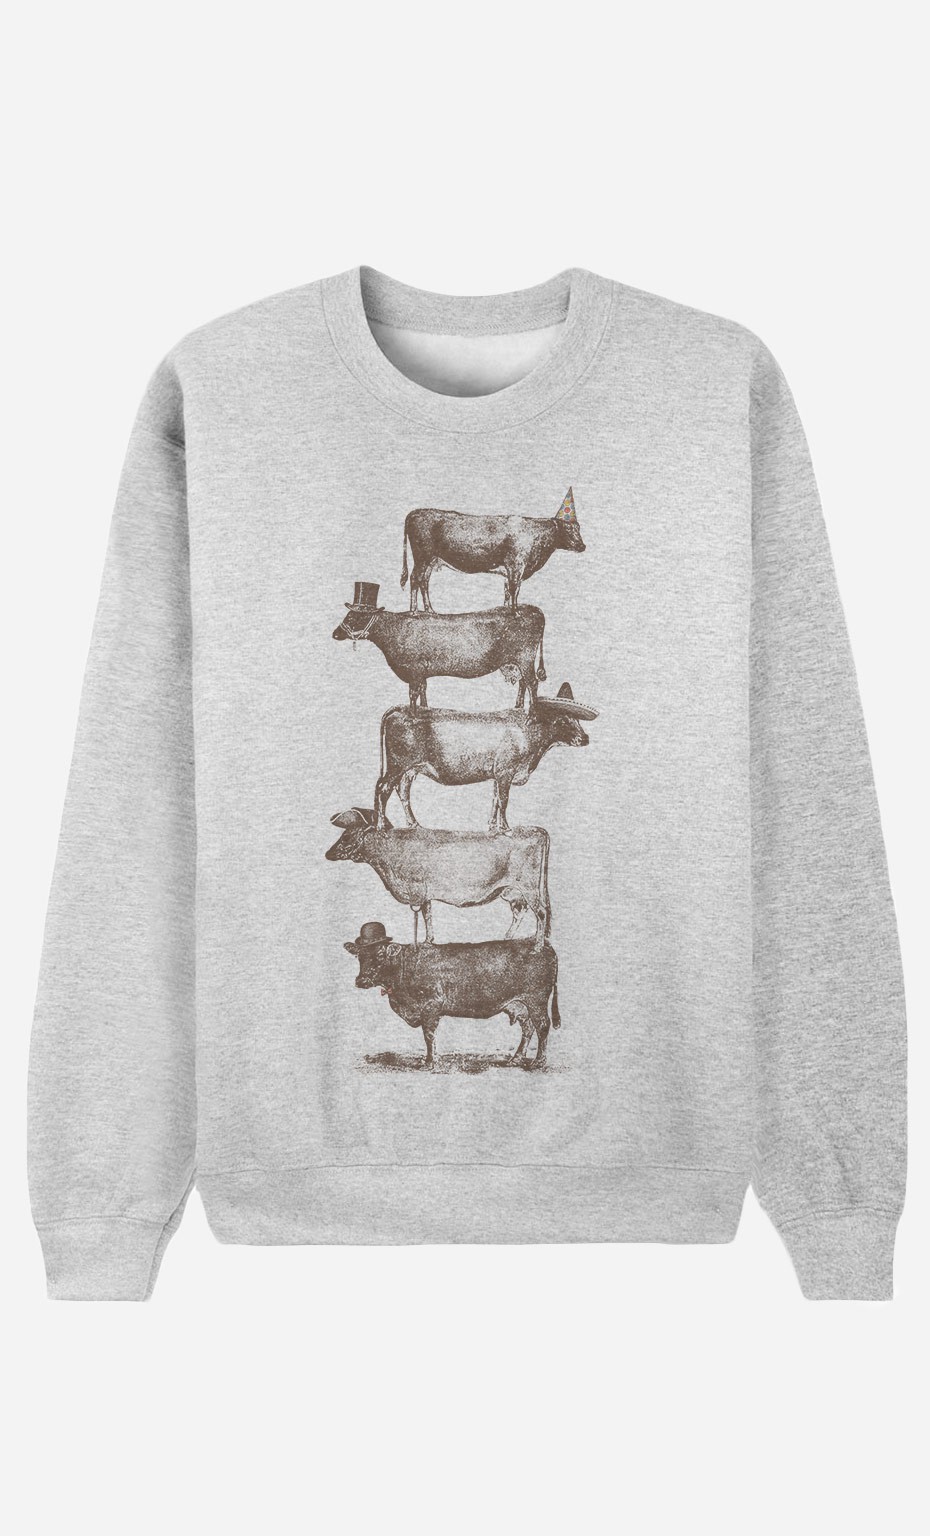 Sweatshirt Cow Cow Nuts